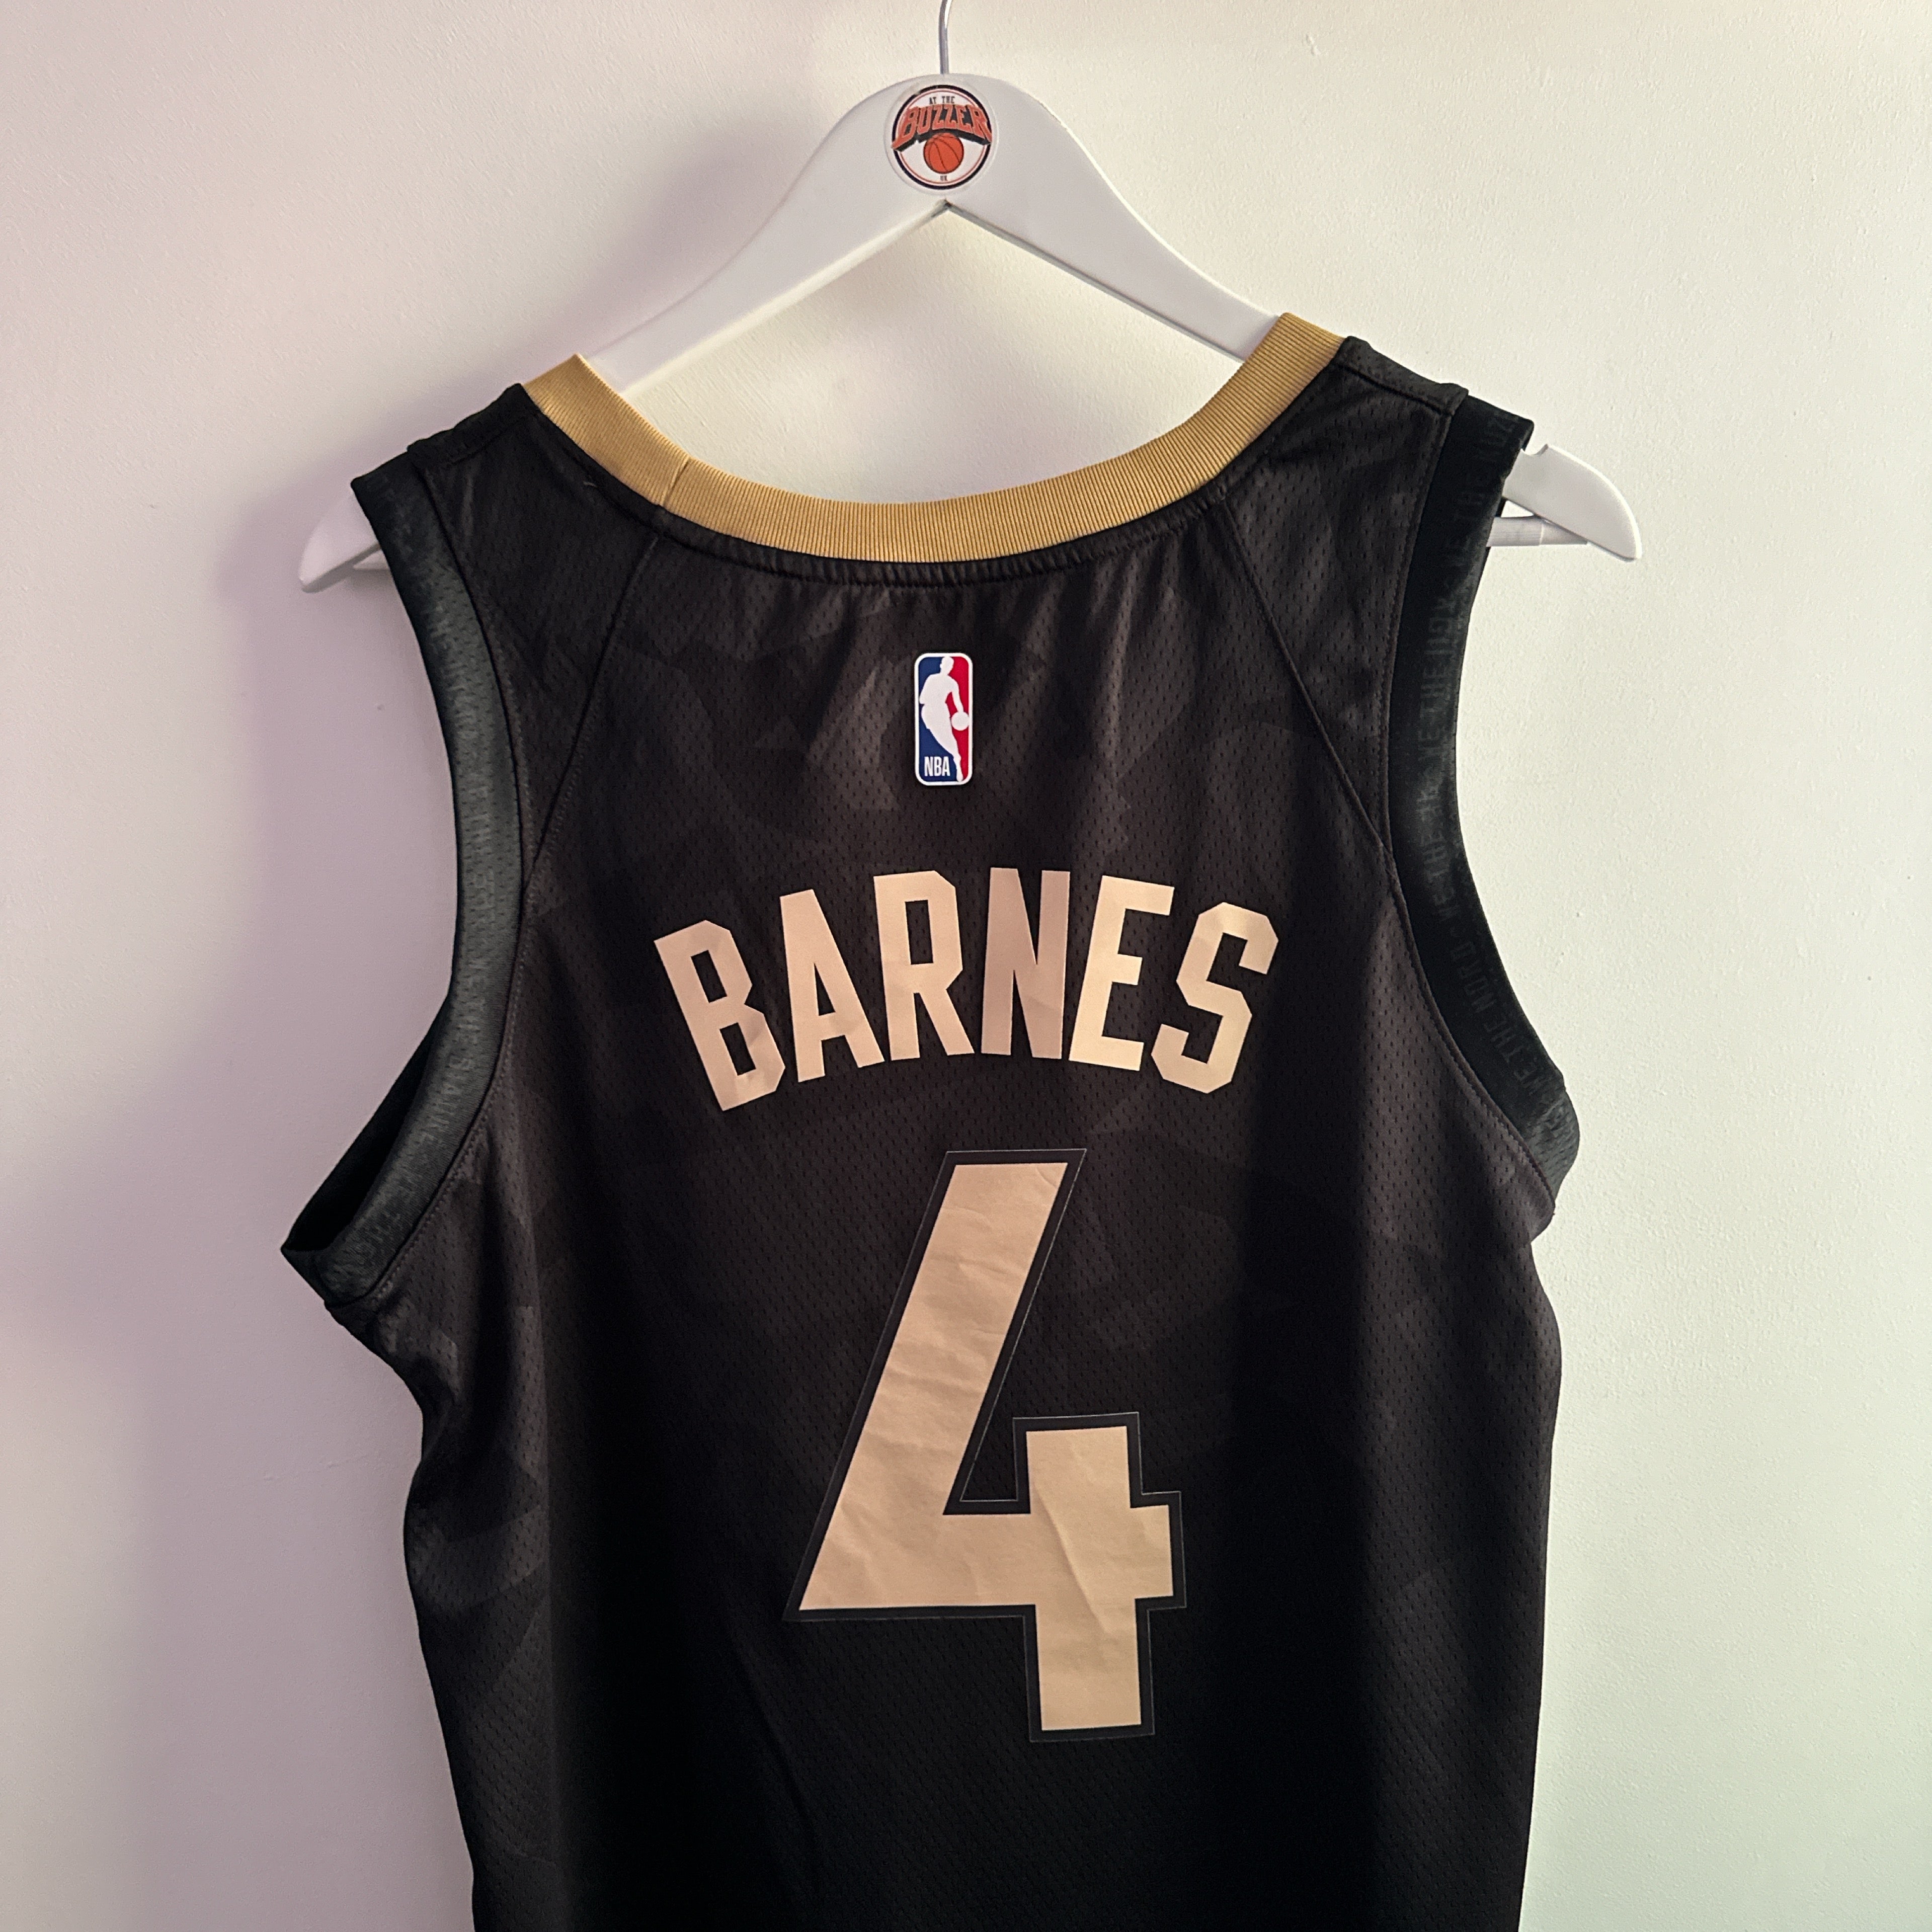 Toronto Raptors Scottie Barnes Nike jersey - Large